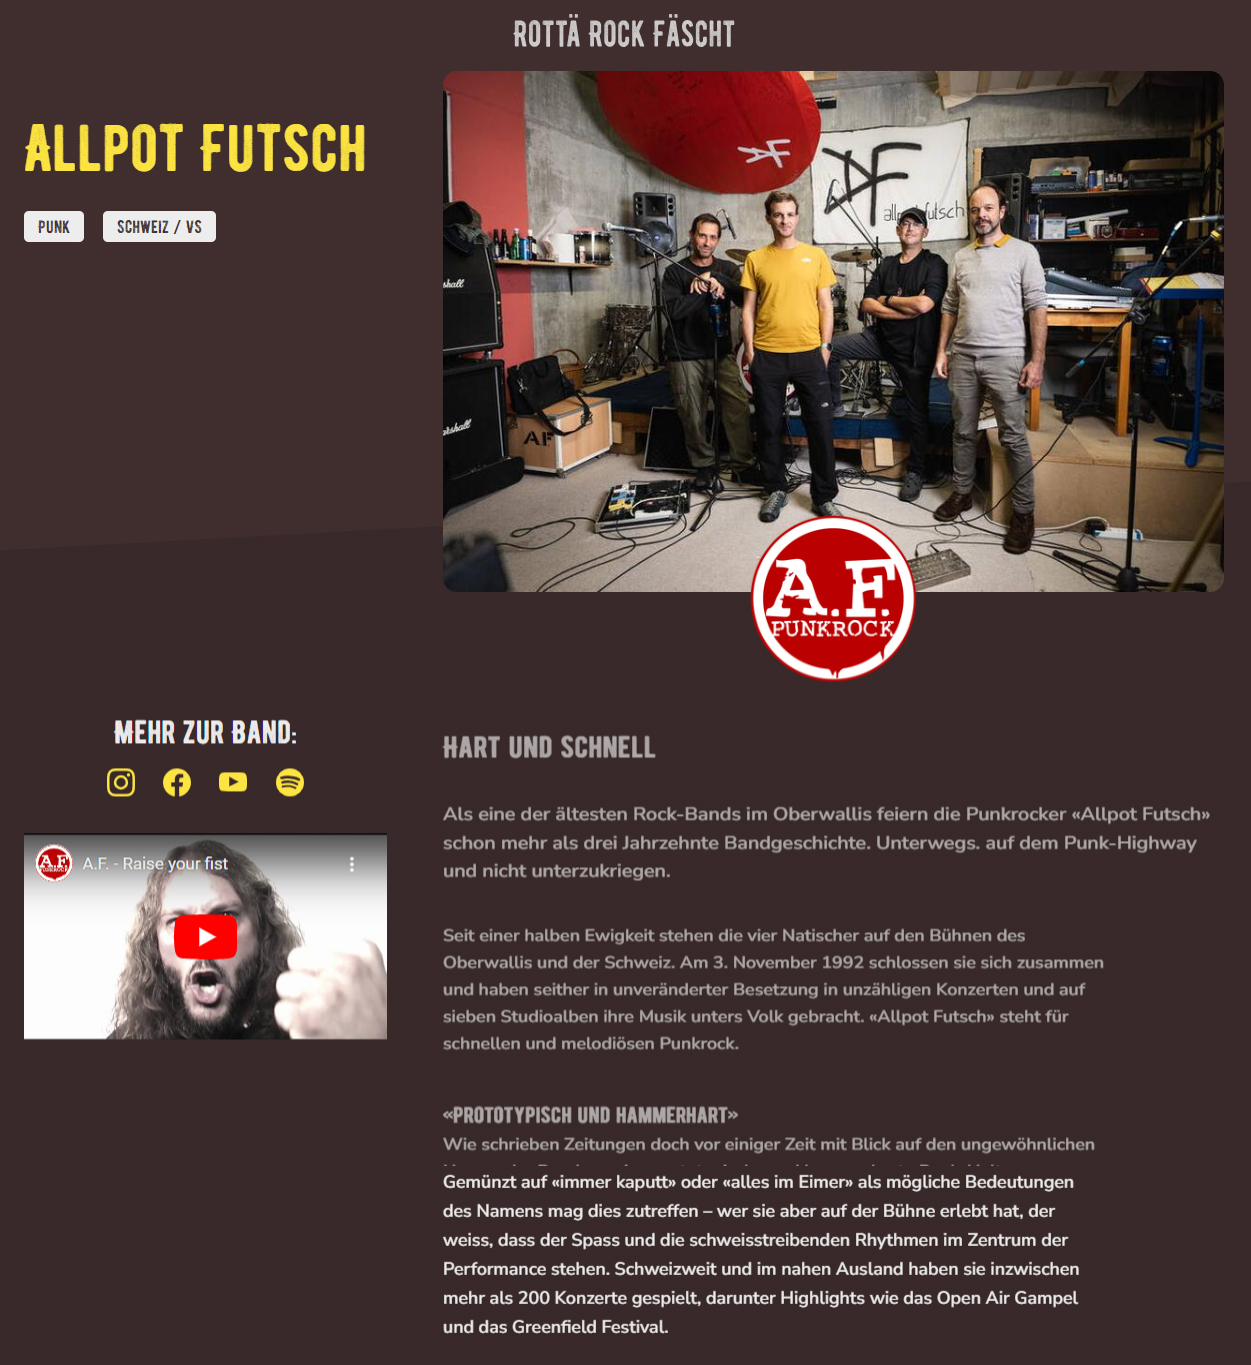 Allpot Futsch live @ Rotten Rock Festival